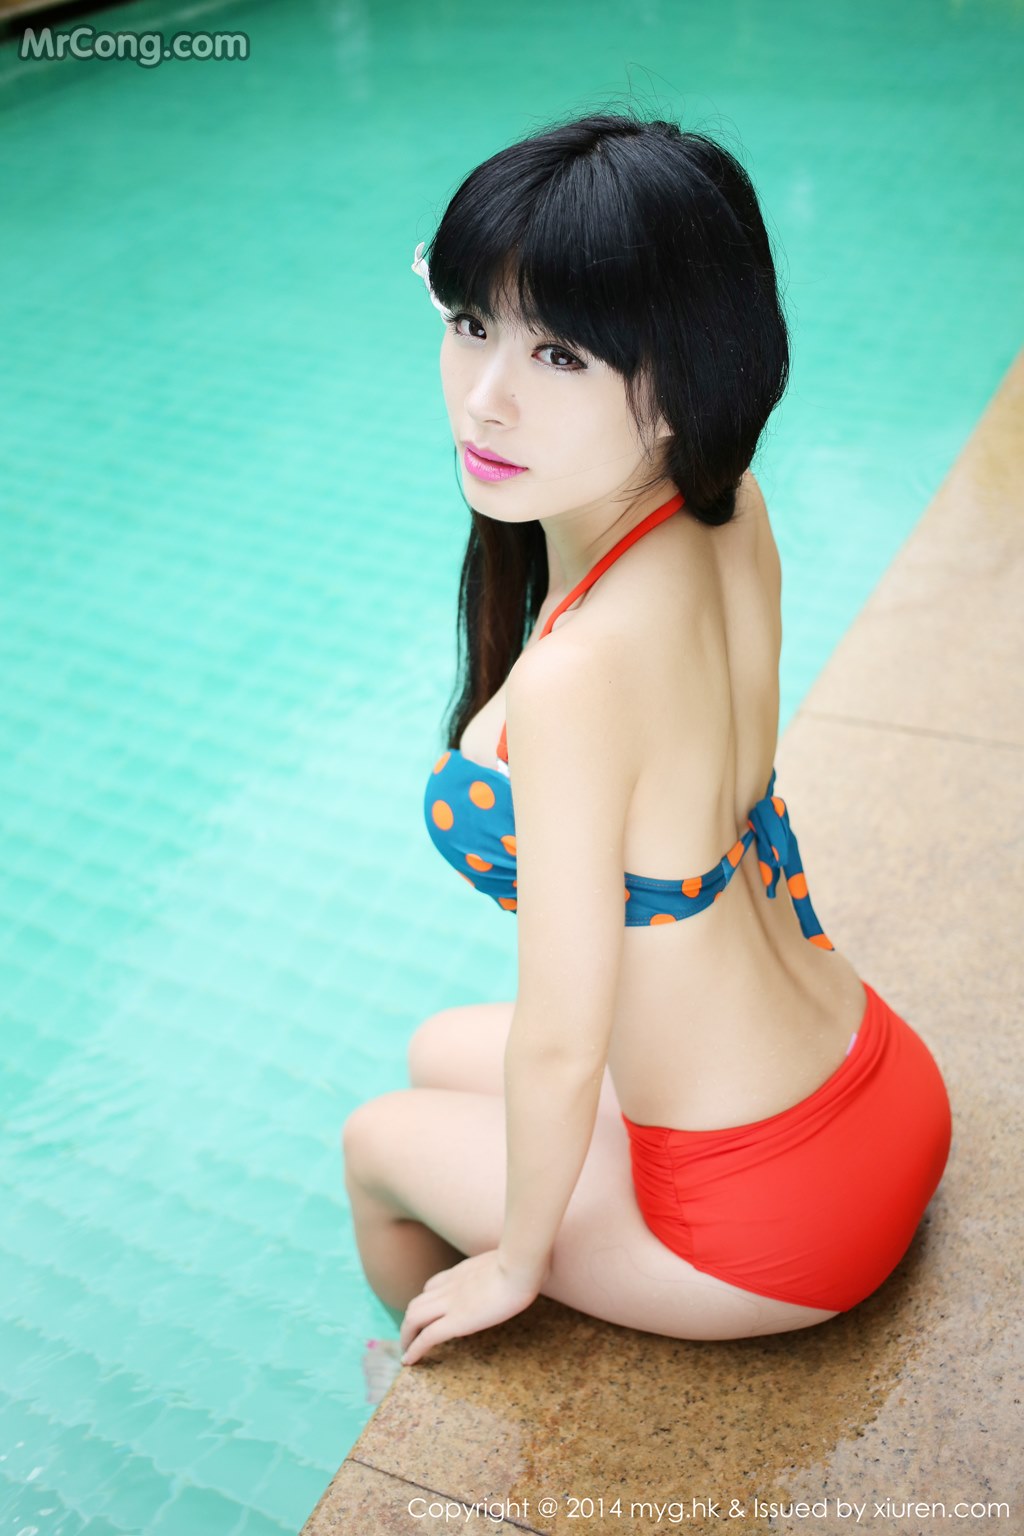 MyGirl Vol.045: Verna Model (刘雪 妮) (67 photos) photo 2-6